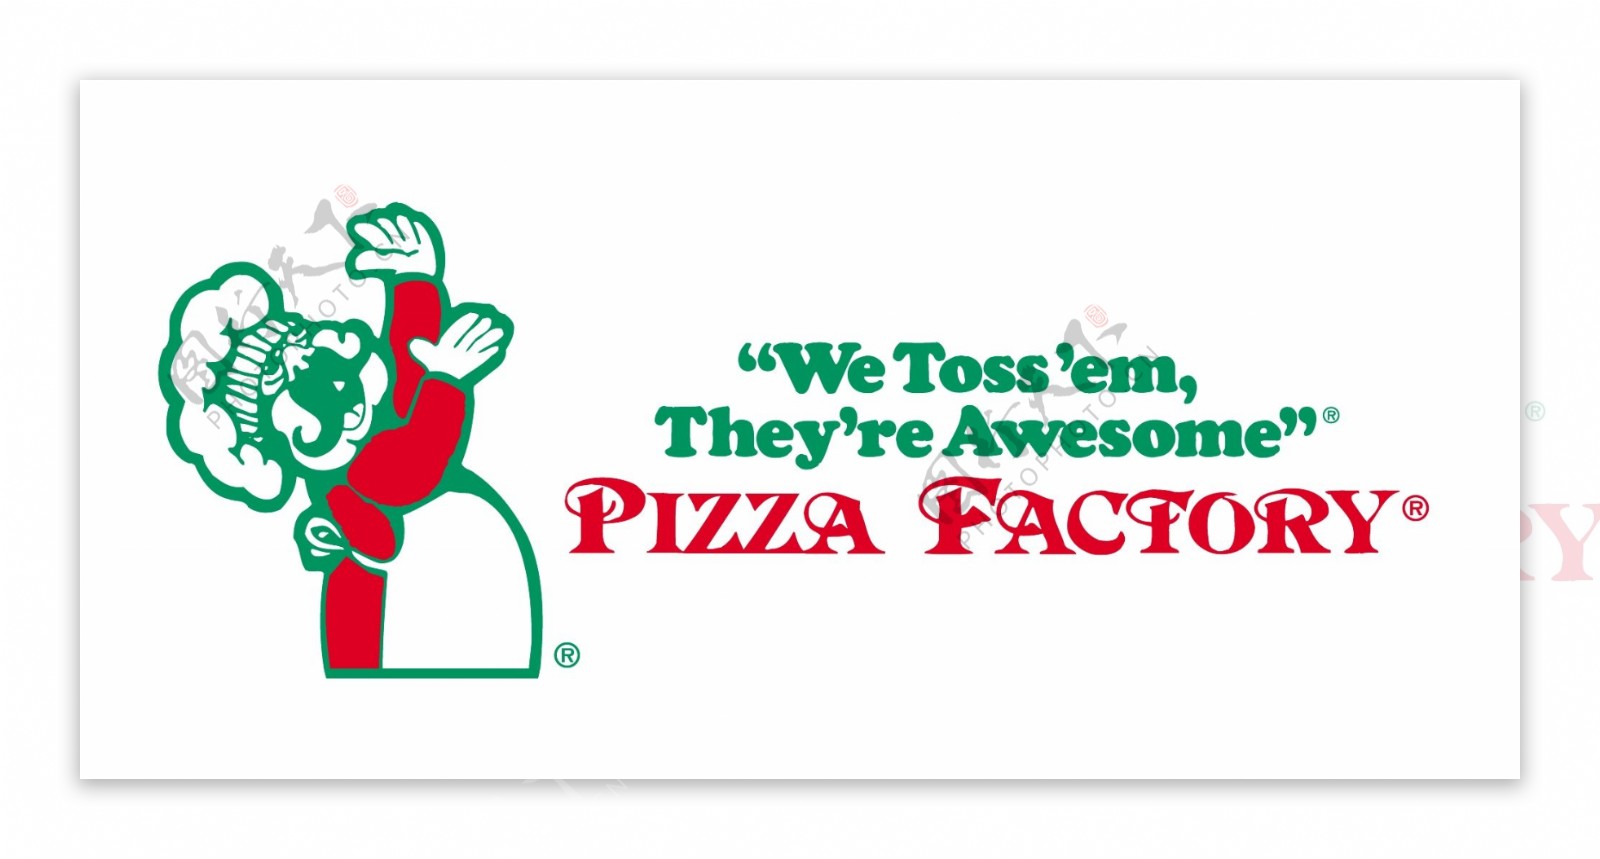 PizzaFactorylogo设计欣赏PizzaFactory饮料品牌LOGO下载标志设计欣赏